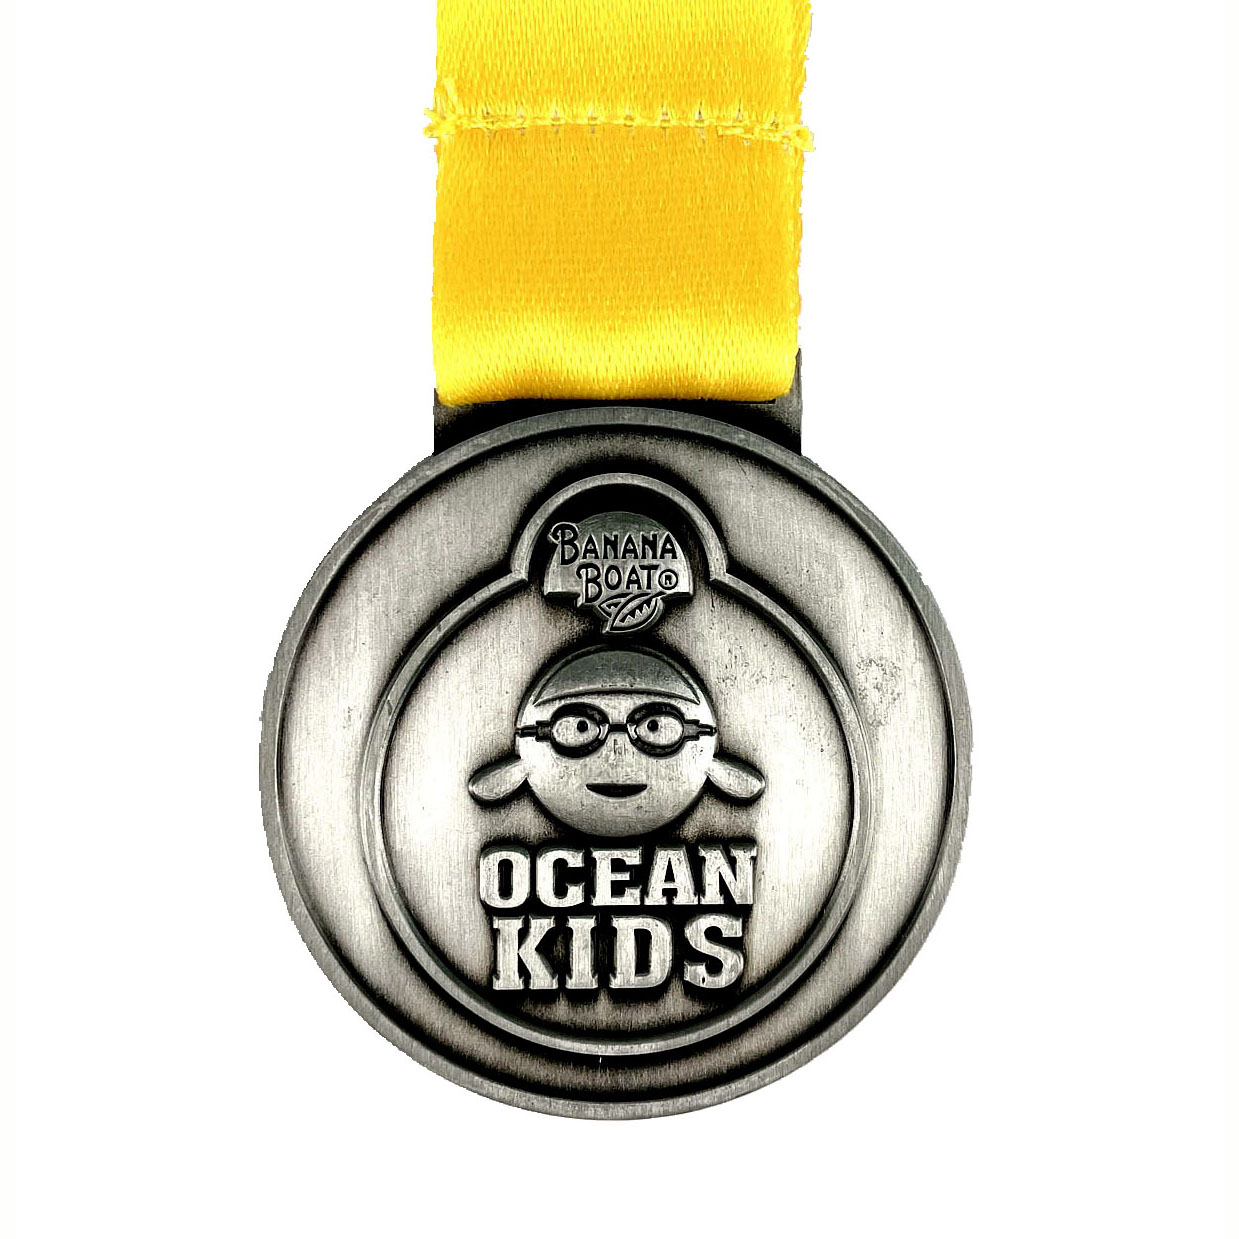 Antique Silver Kids' Swimming Medal with Bespoke Lanyard